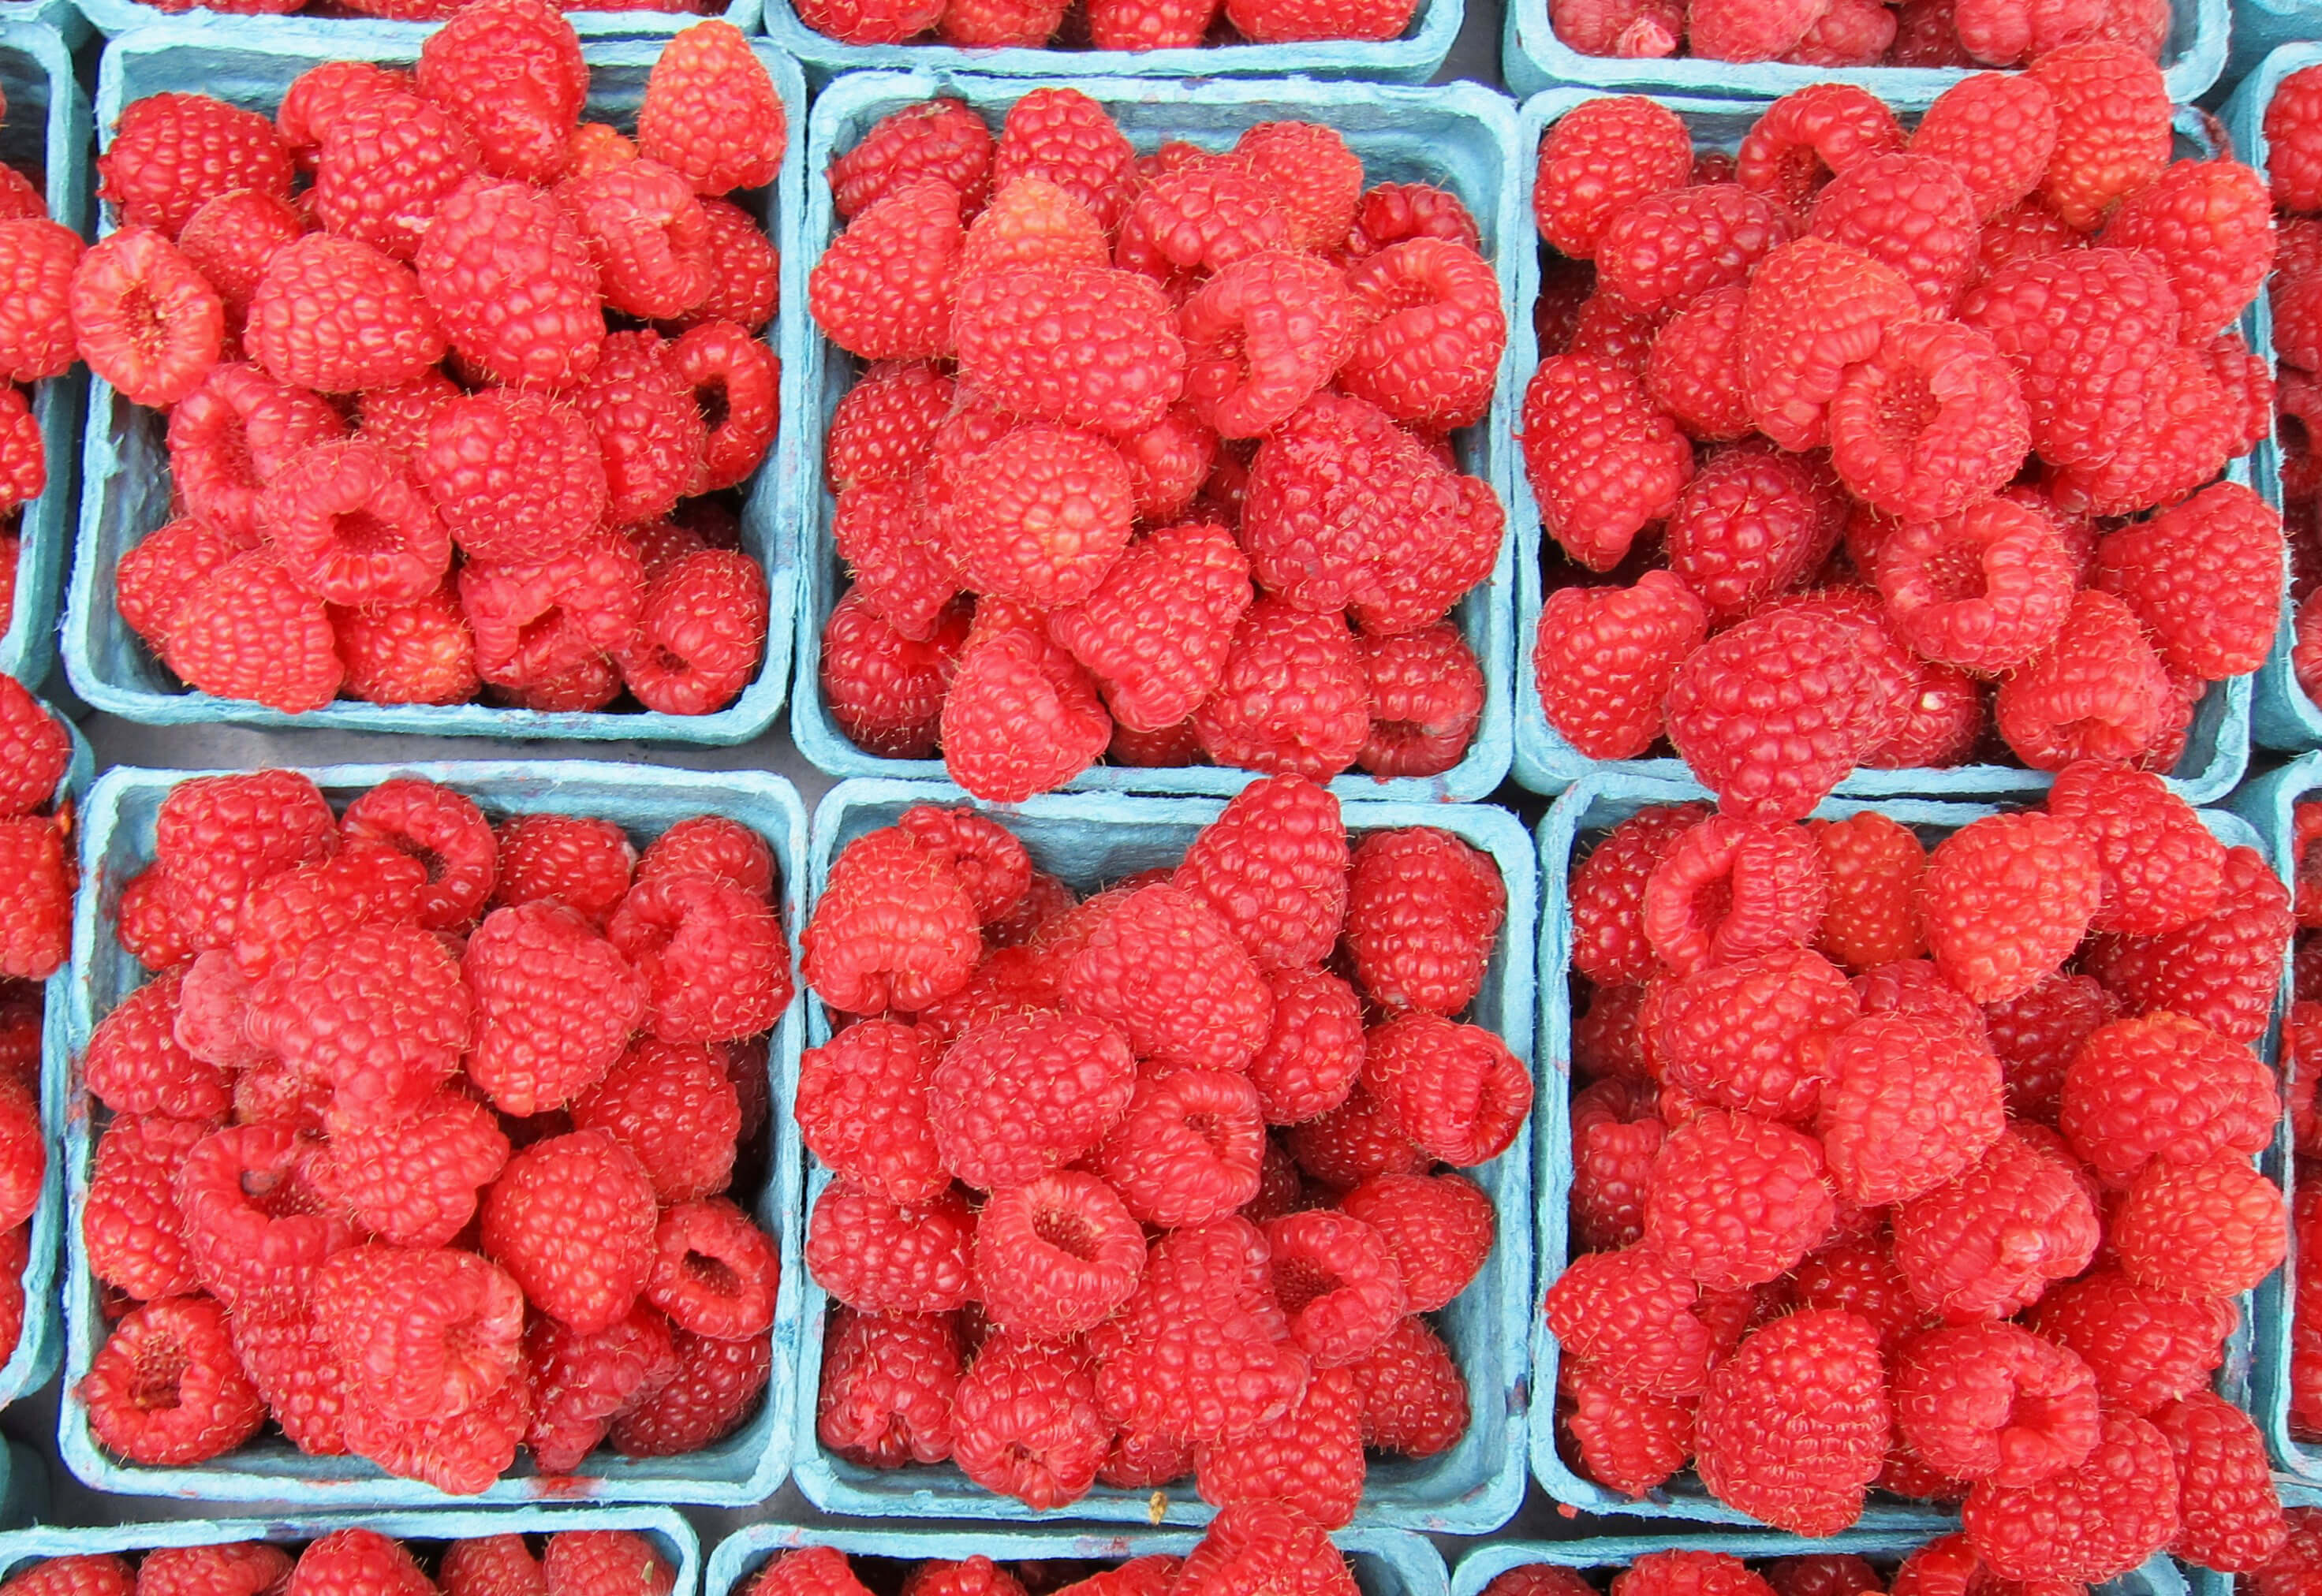 Cartons of fresh raspberries.